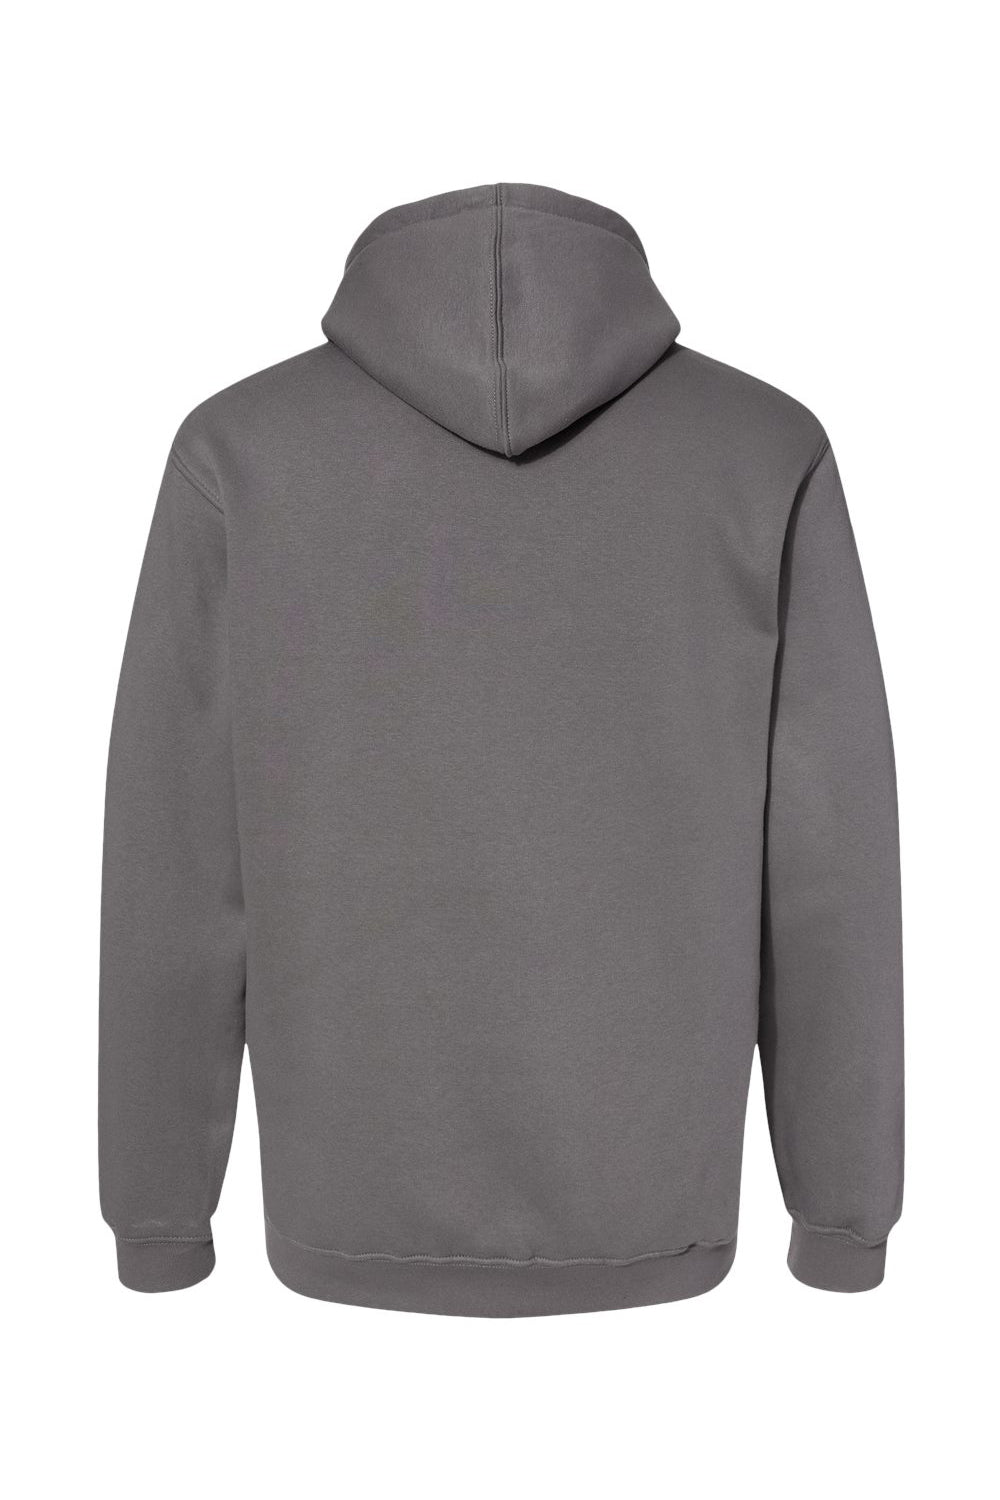 Bayside BA960 Mens USA Made Hooded Sweatshirt Hoodie Charcoal Grey Flat Back